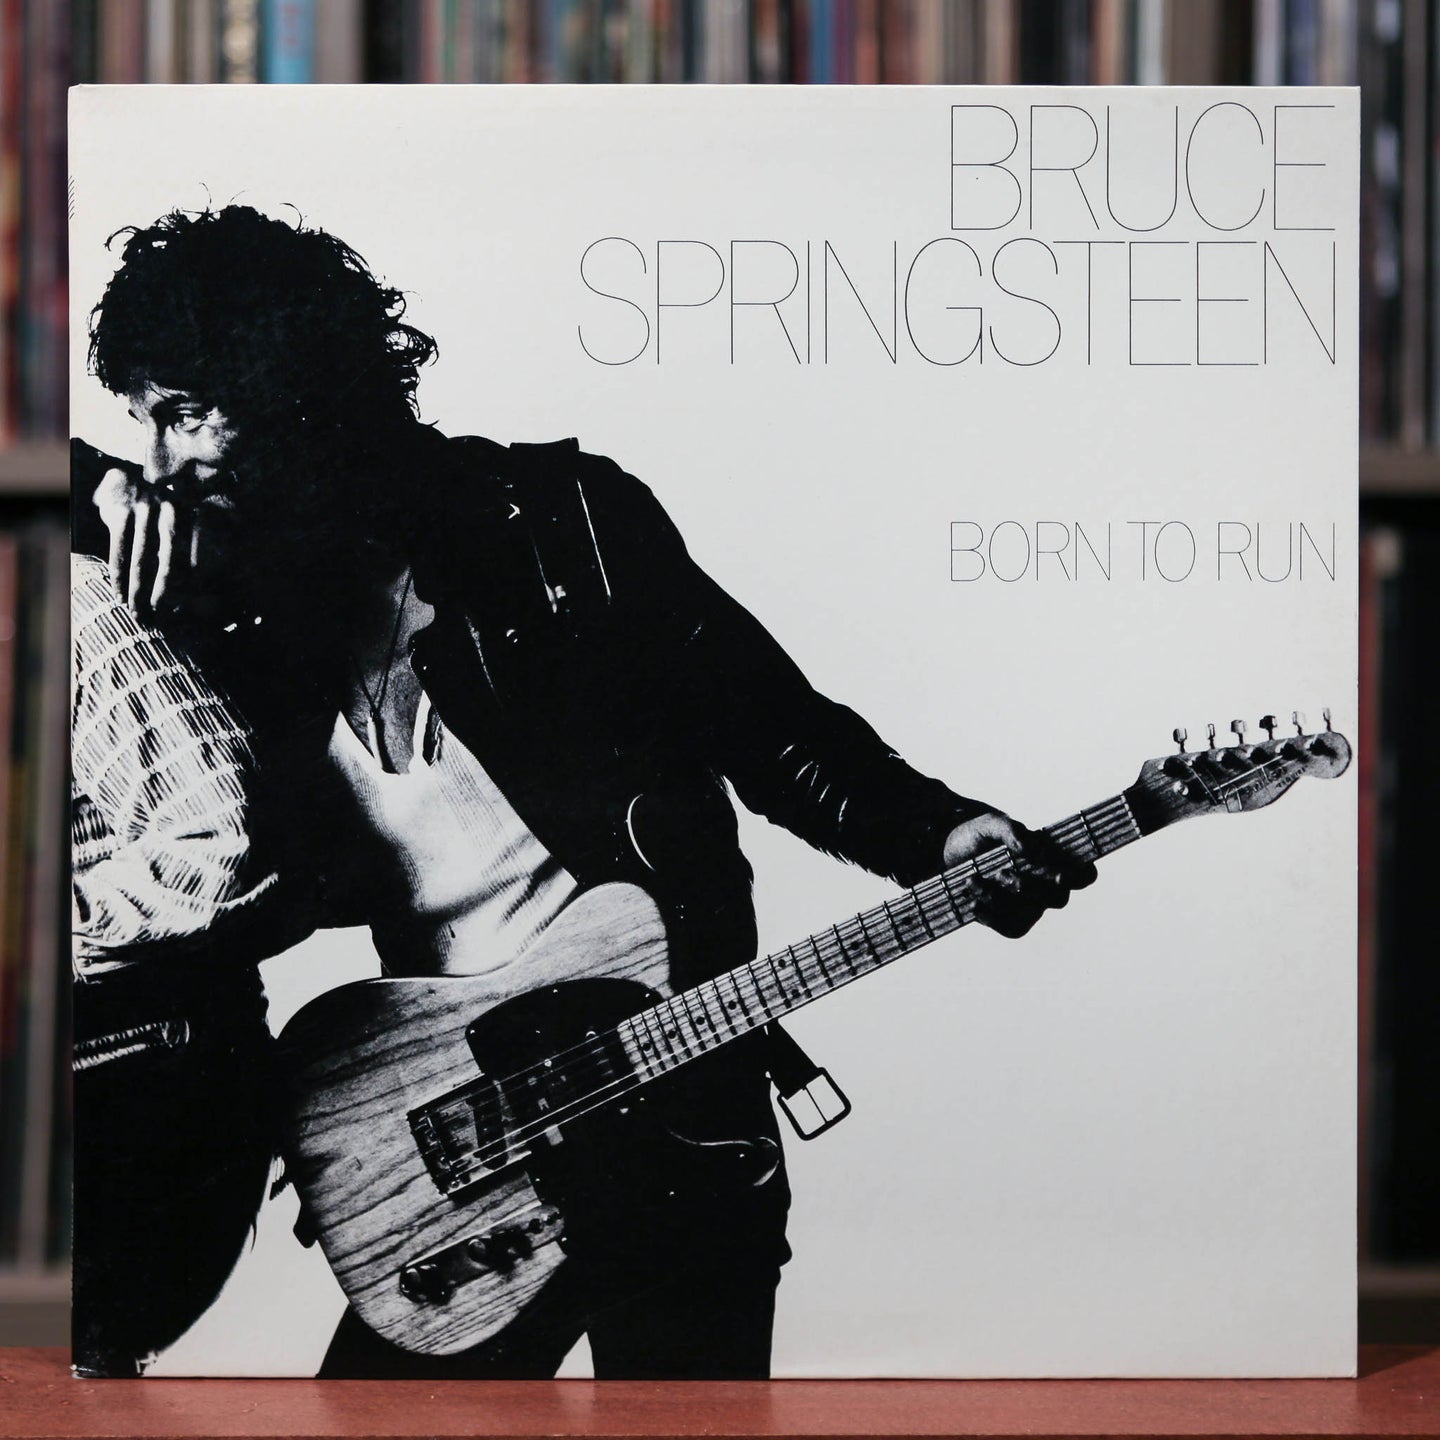 Bruce Springsteen - Born To Run - 1970's Columbia, VG+/VG+